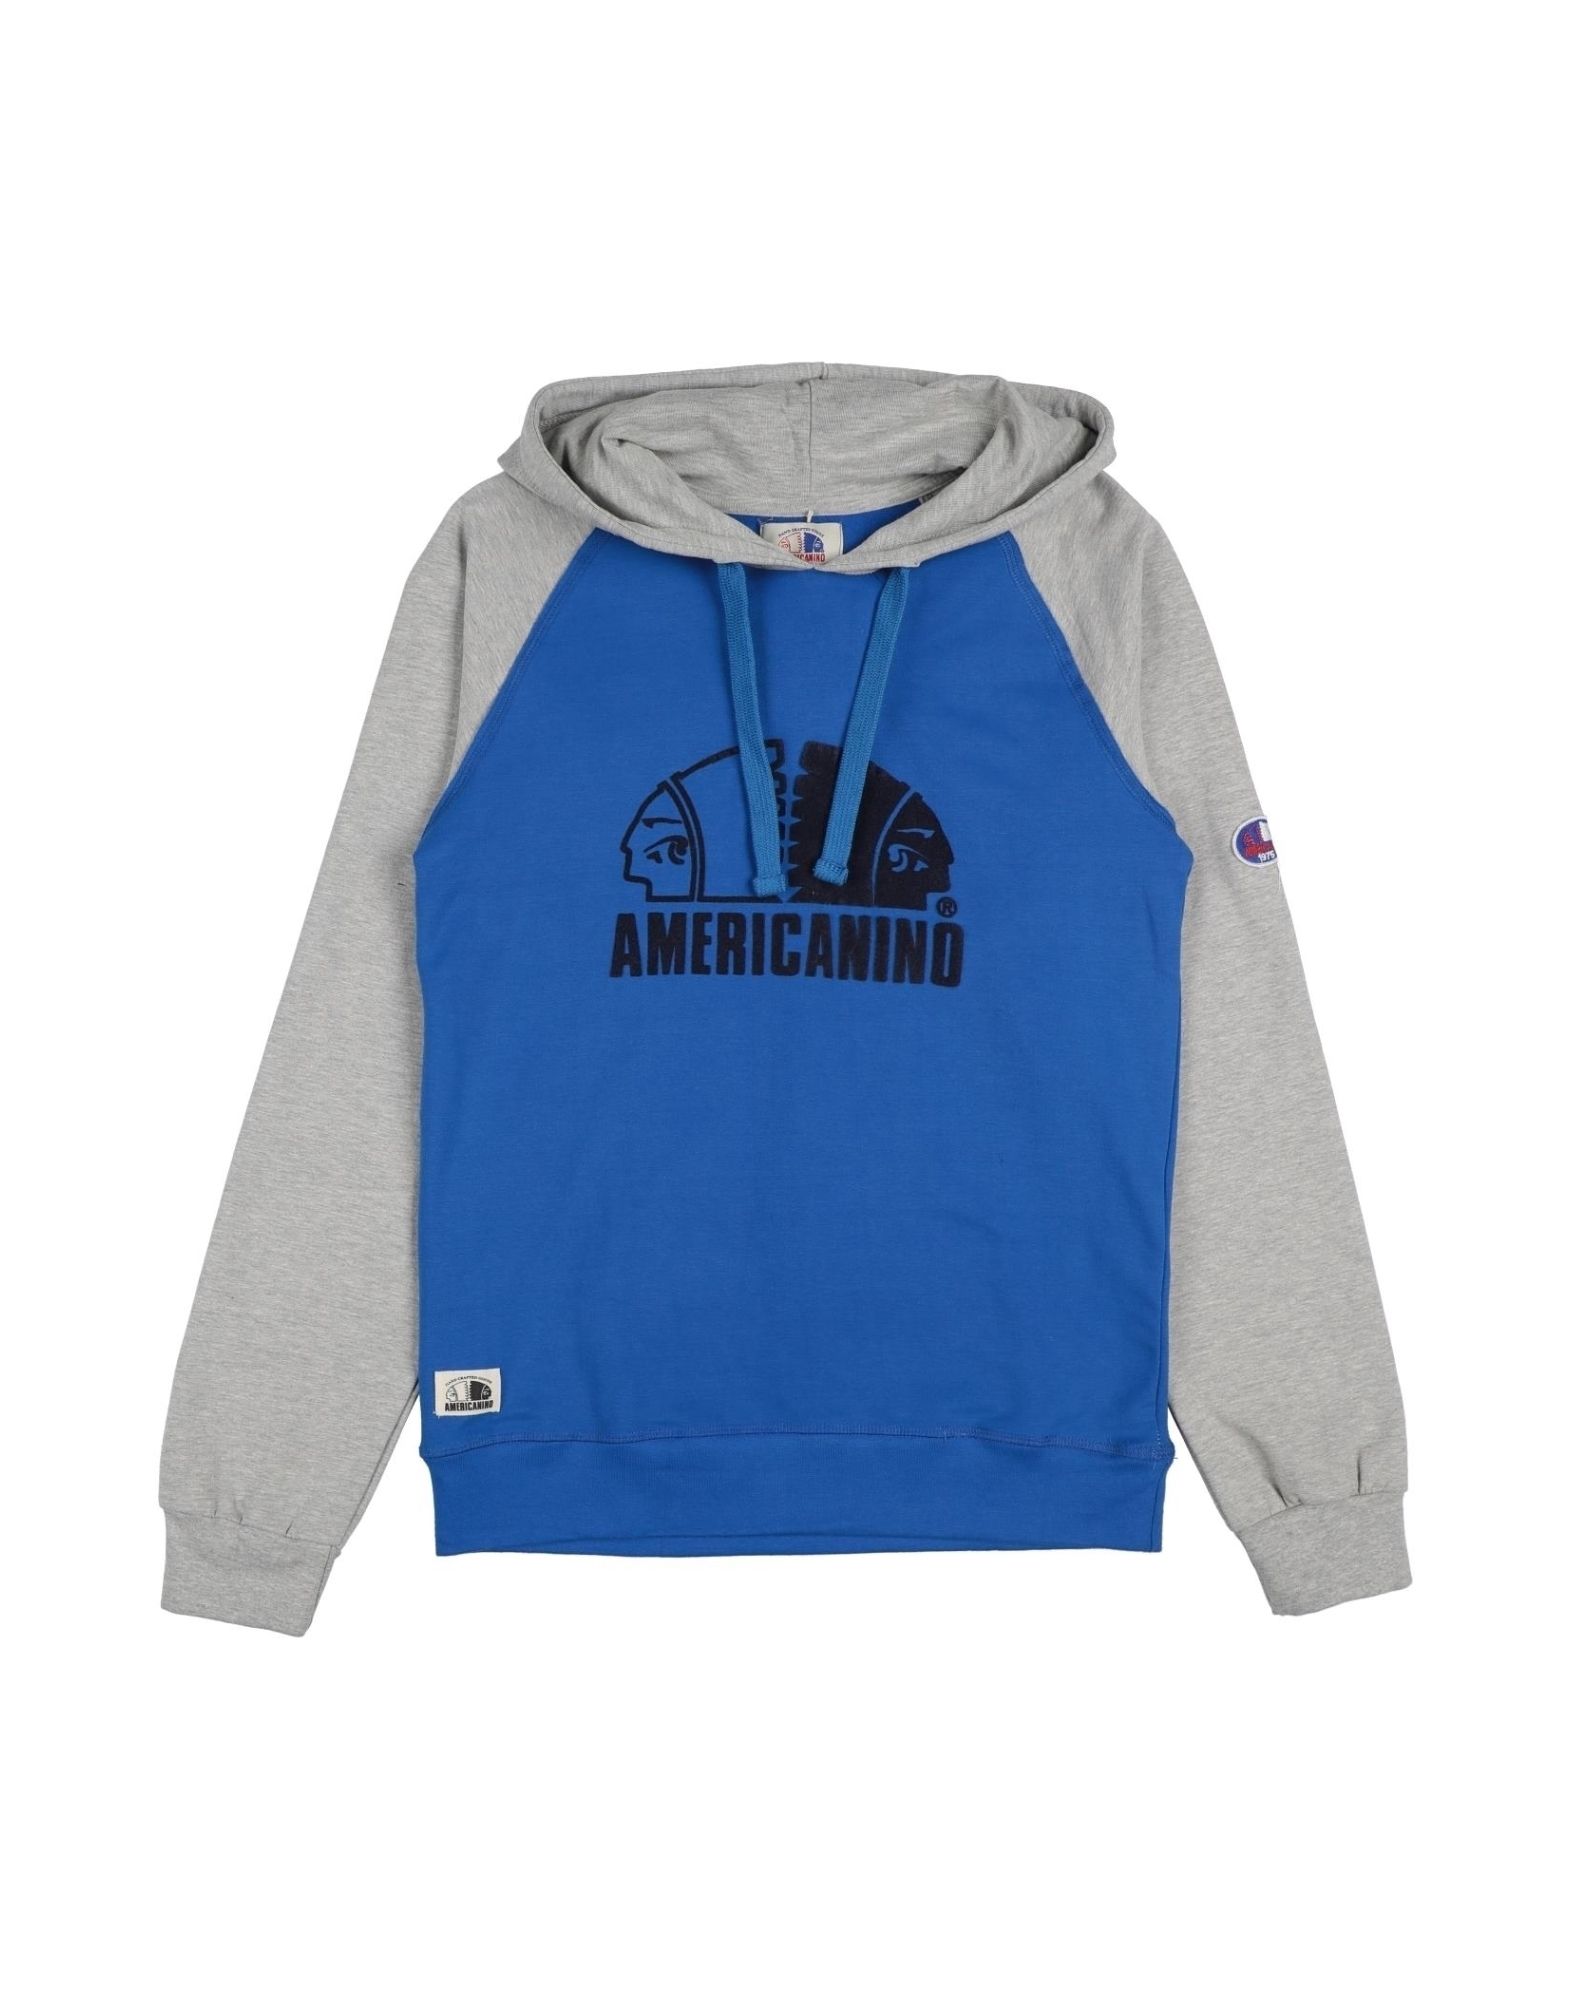 Americanino Kids' Sweatshirts In Bright Blue